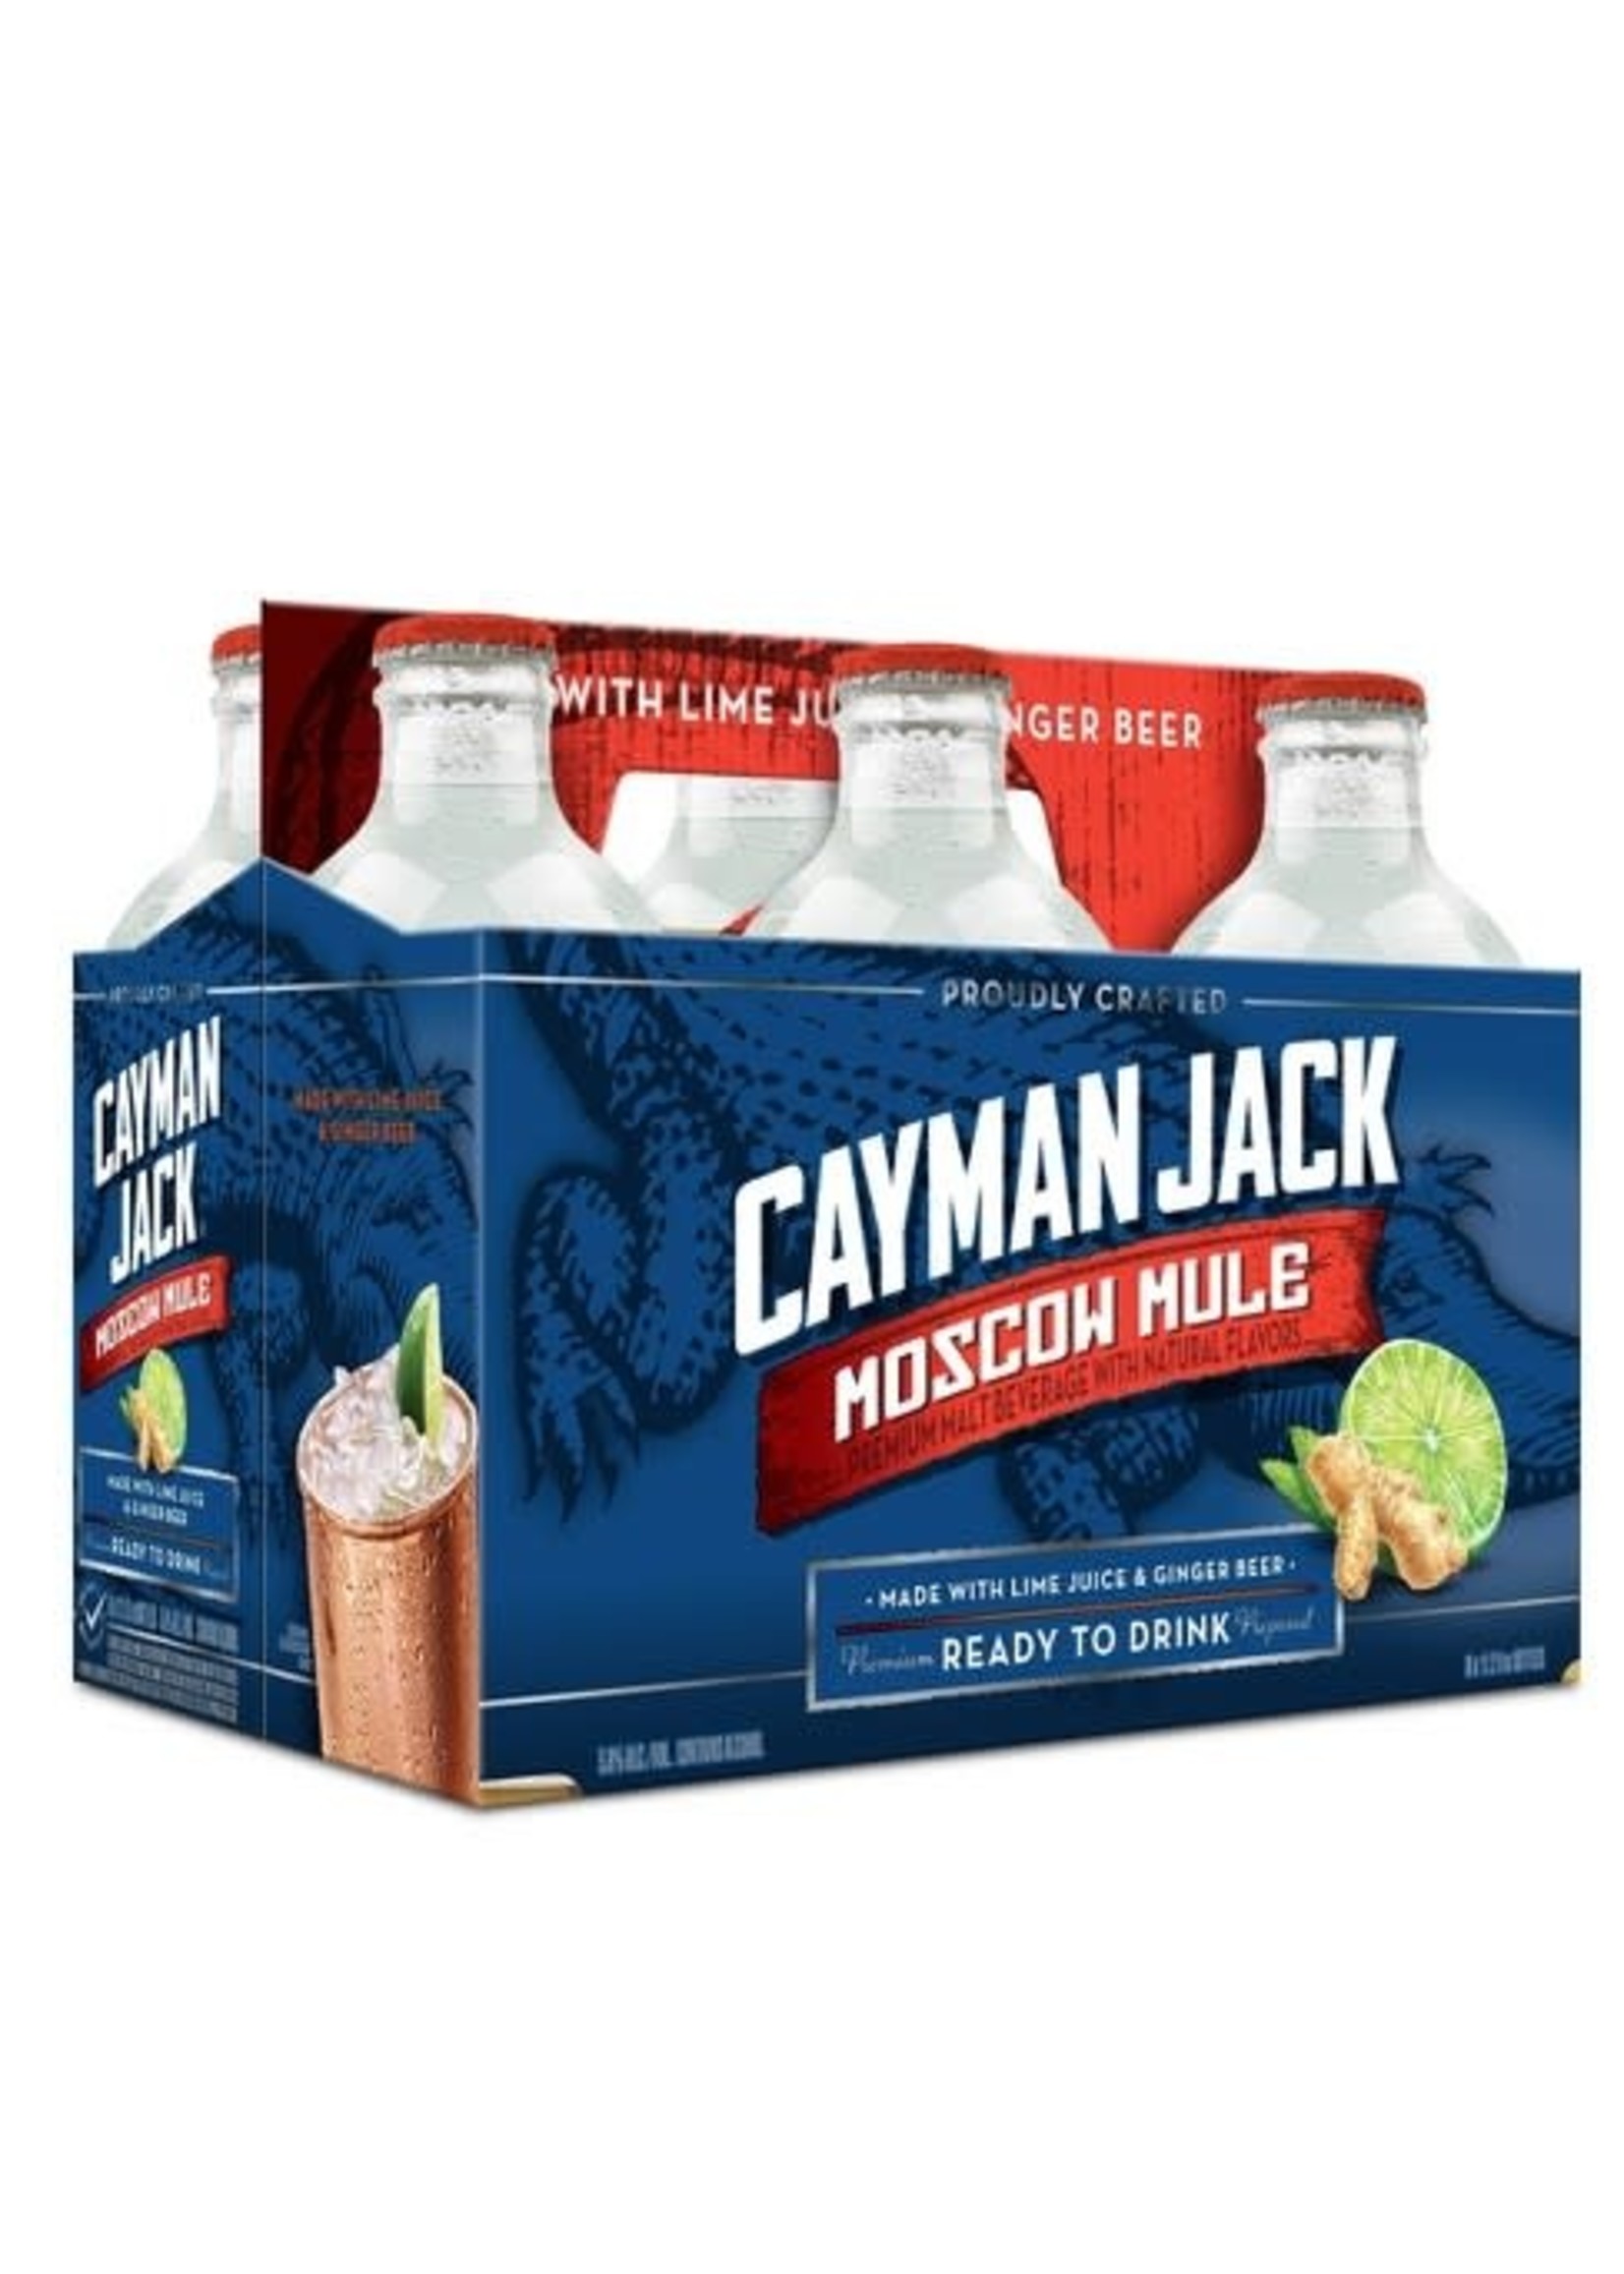 Cayman Jack Moscow Mule 6pk 12oz Bottles